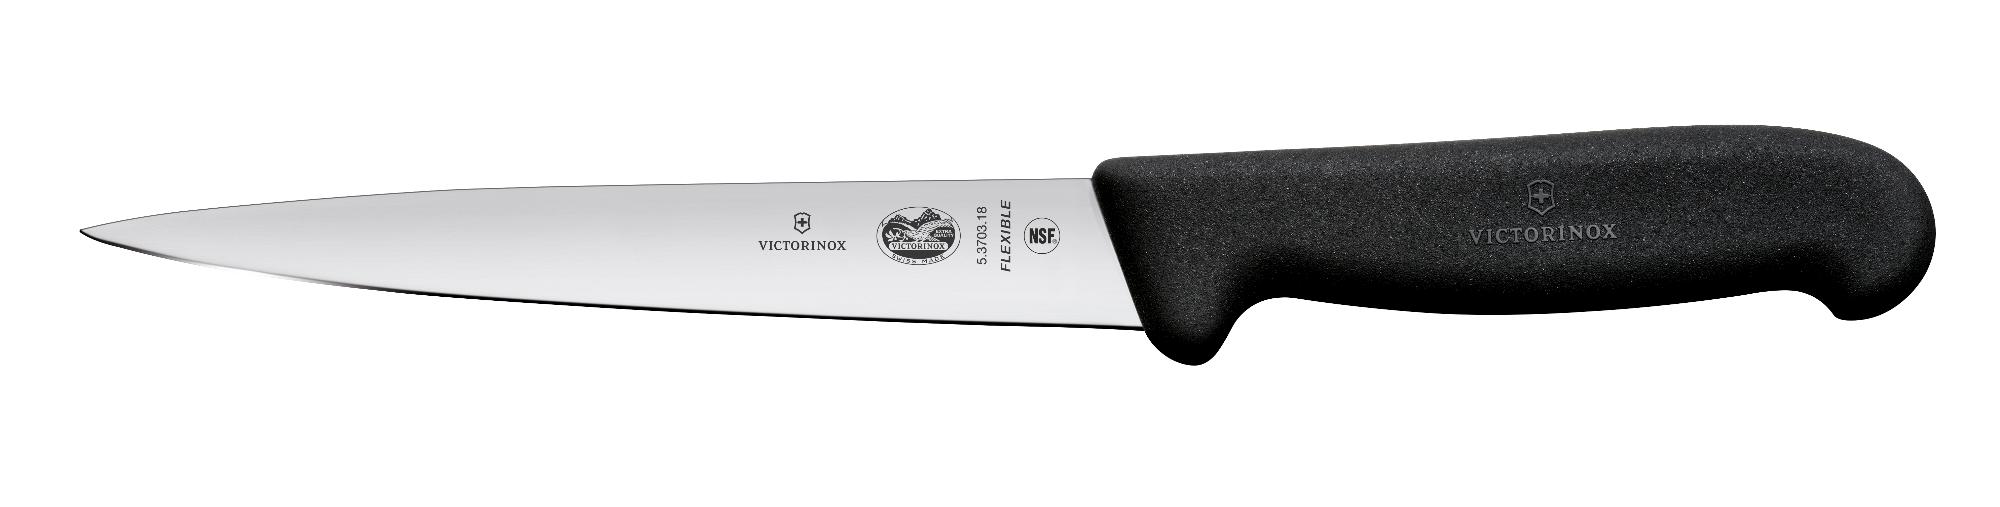 Fibrox filleting knife, 16 cm - black